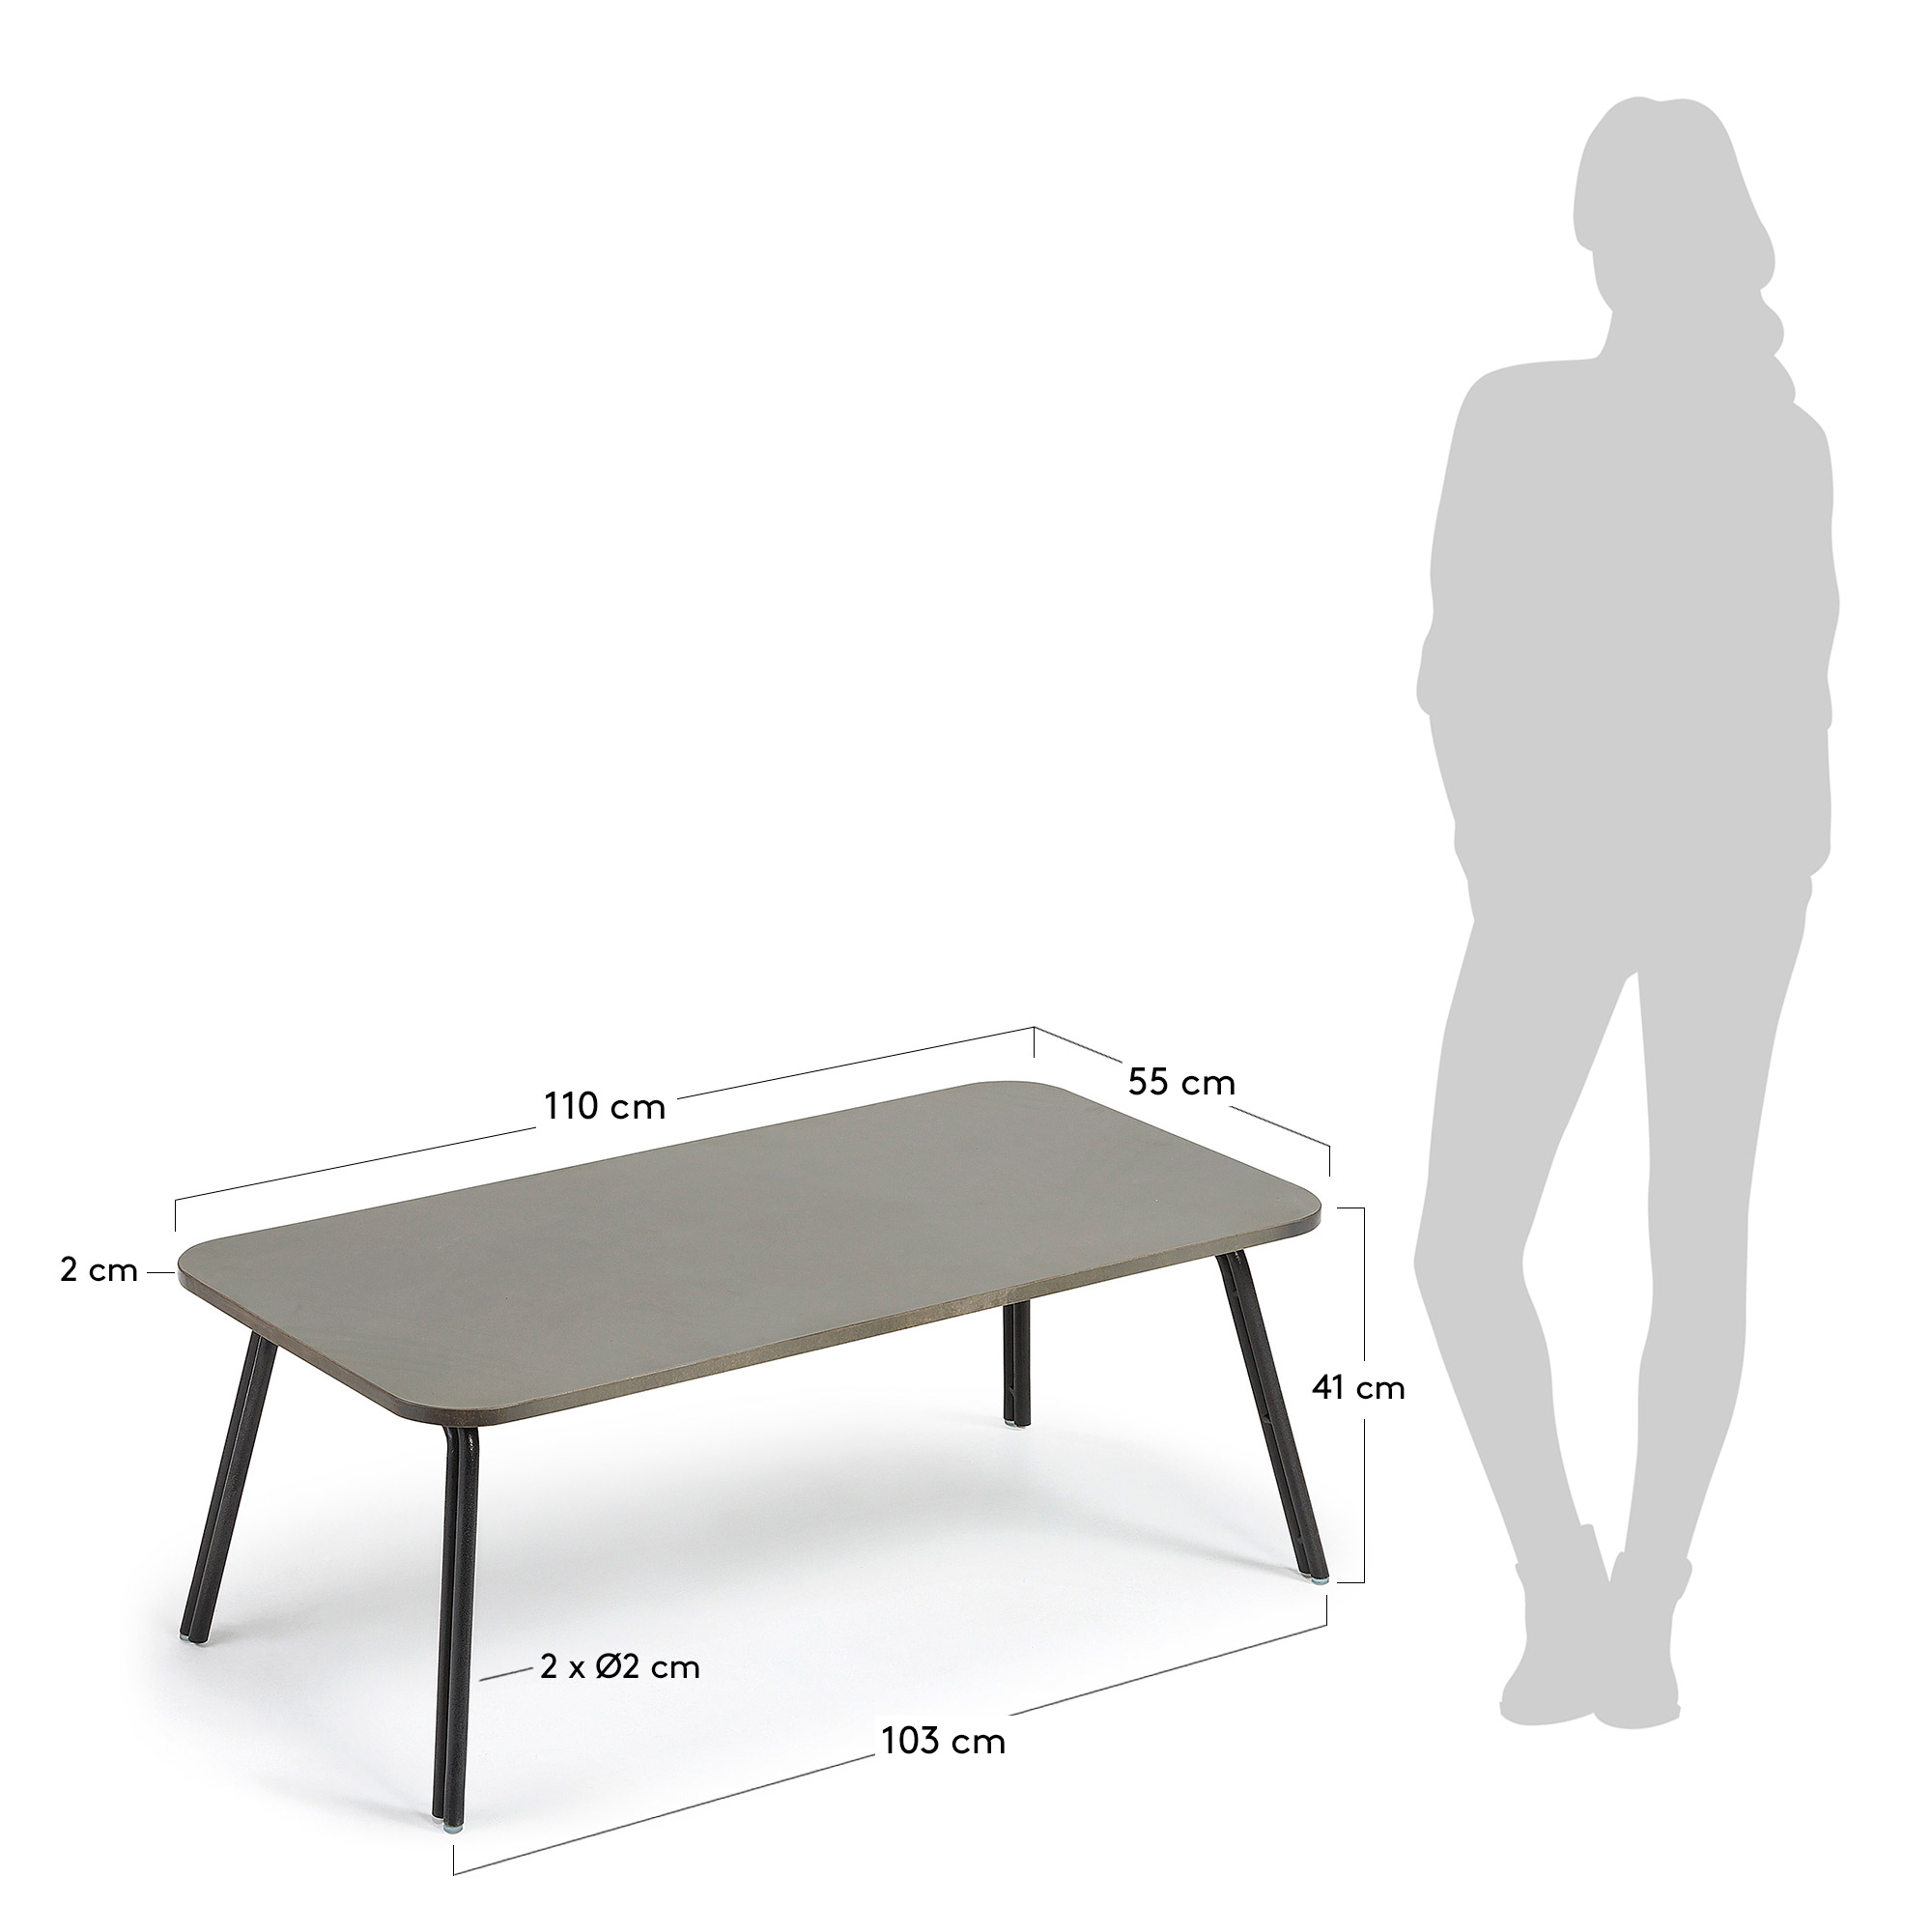 Newport coffee table 110 x 55 cm - sizes